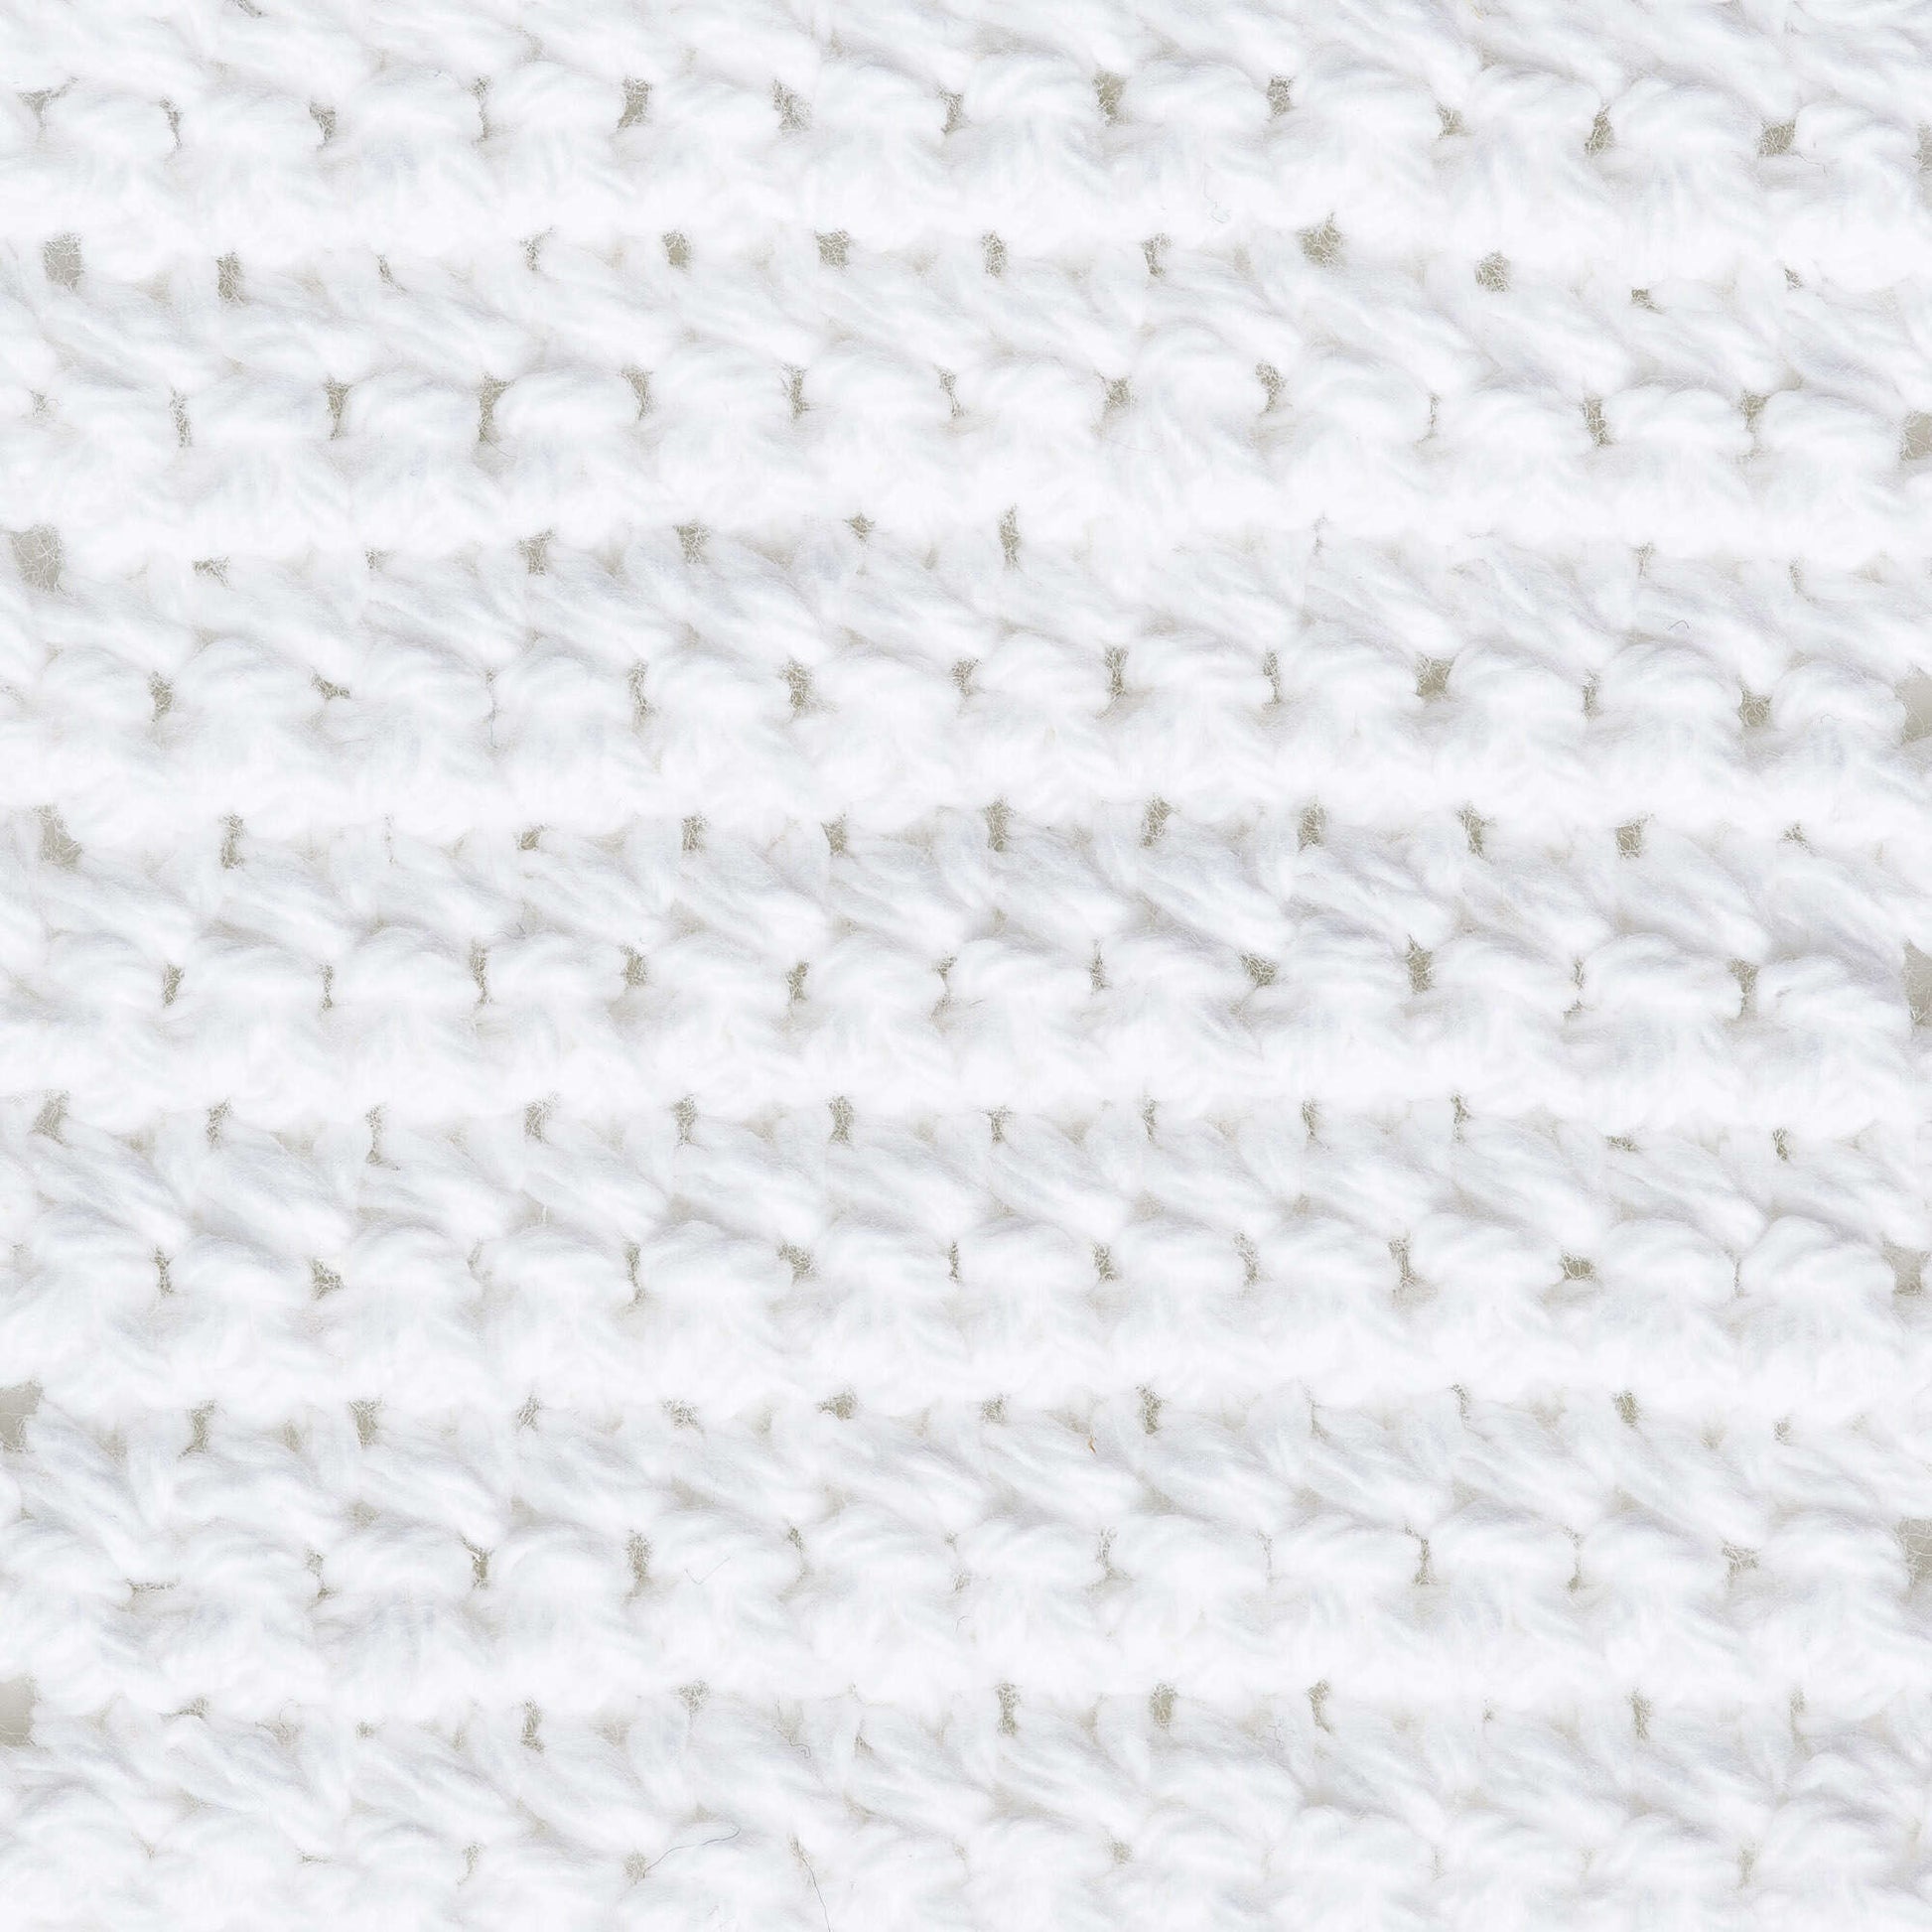 Bernat Handicrafter Cotton Scents Yarn - Discontinued Shades